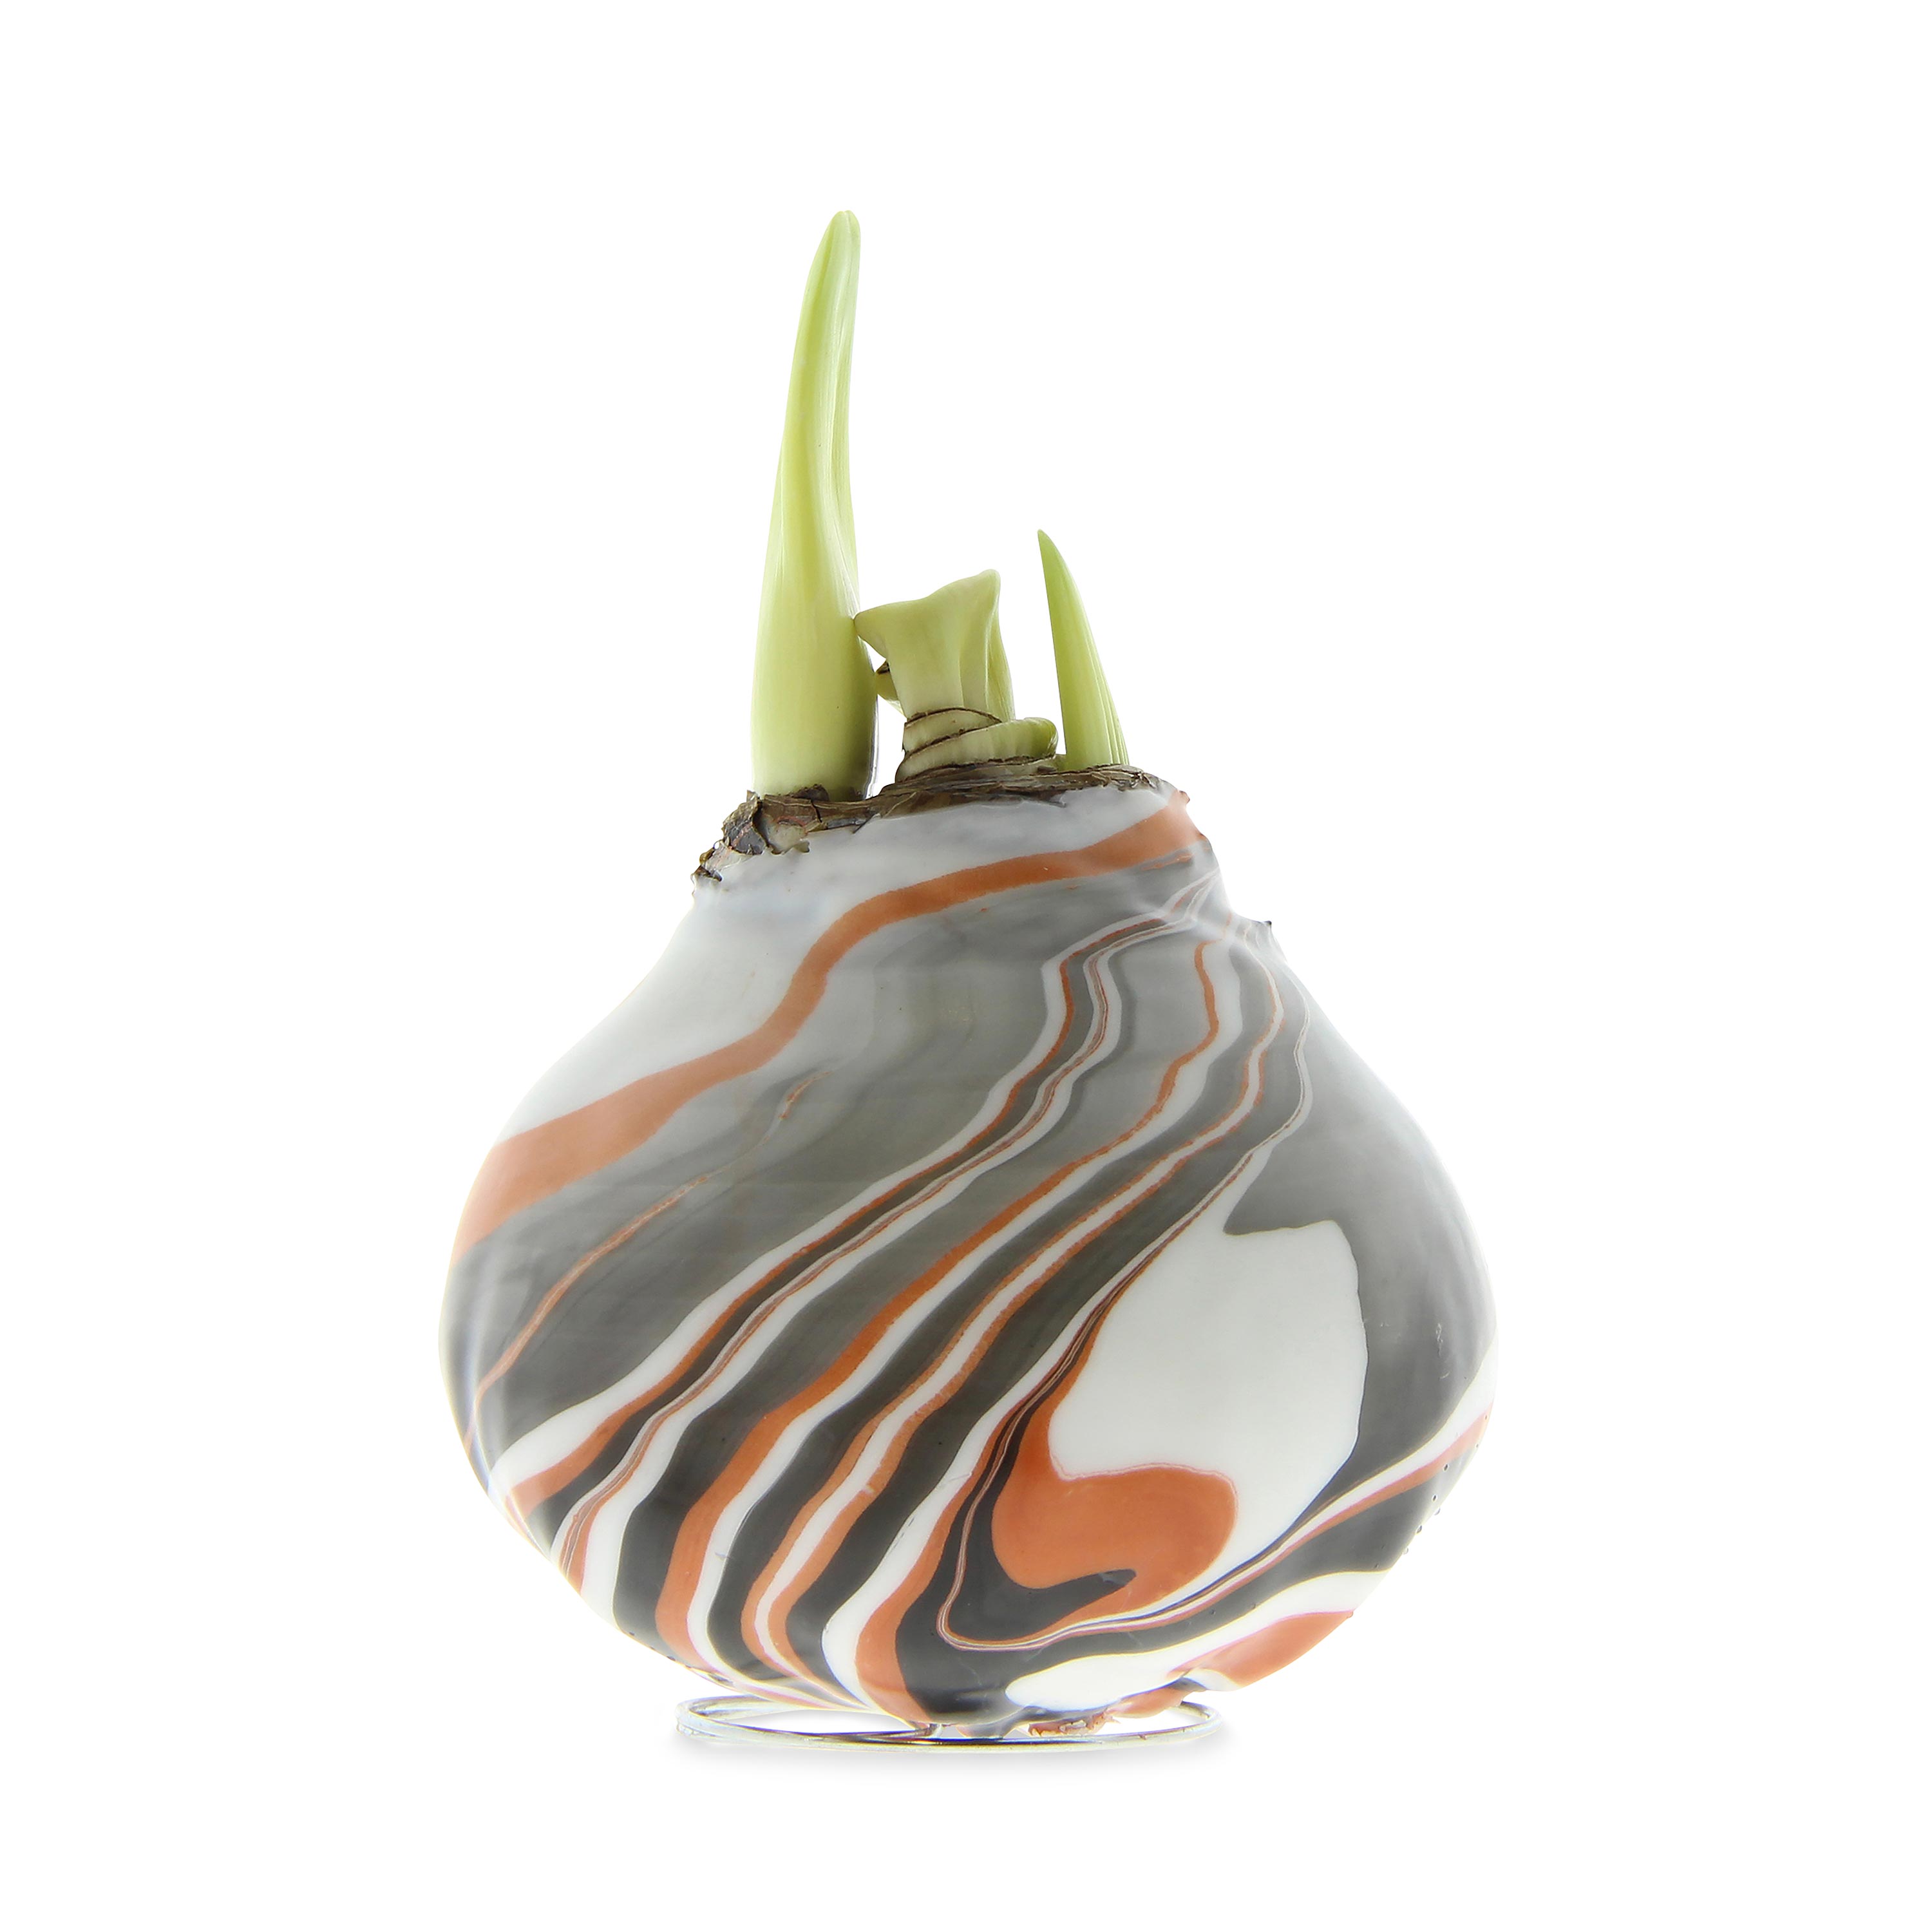 Jumbo Size- No-Water Wax Dipped Amaryllis Bulb